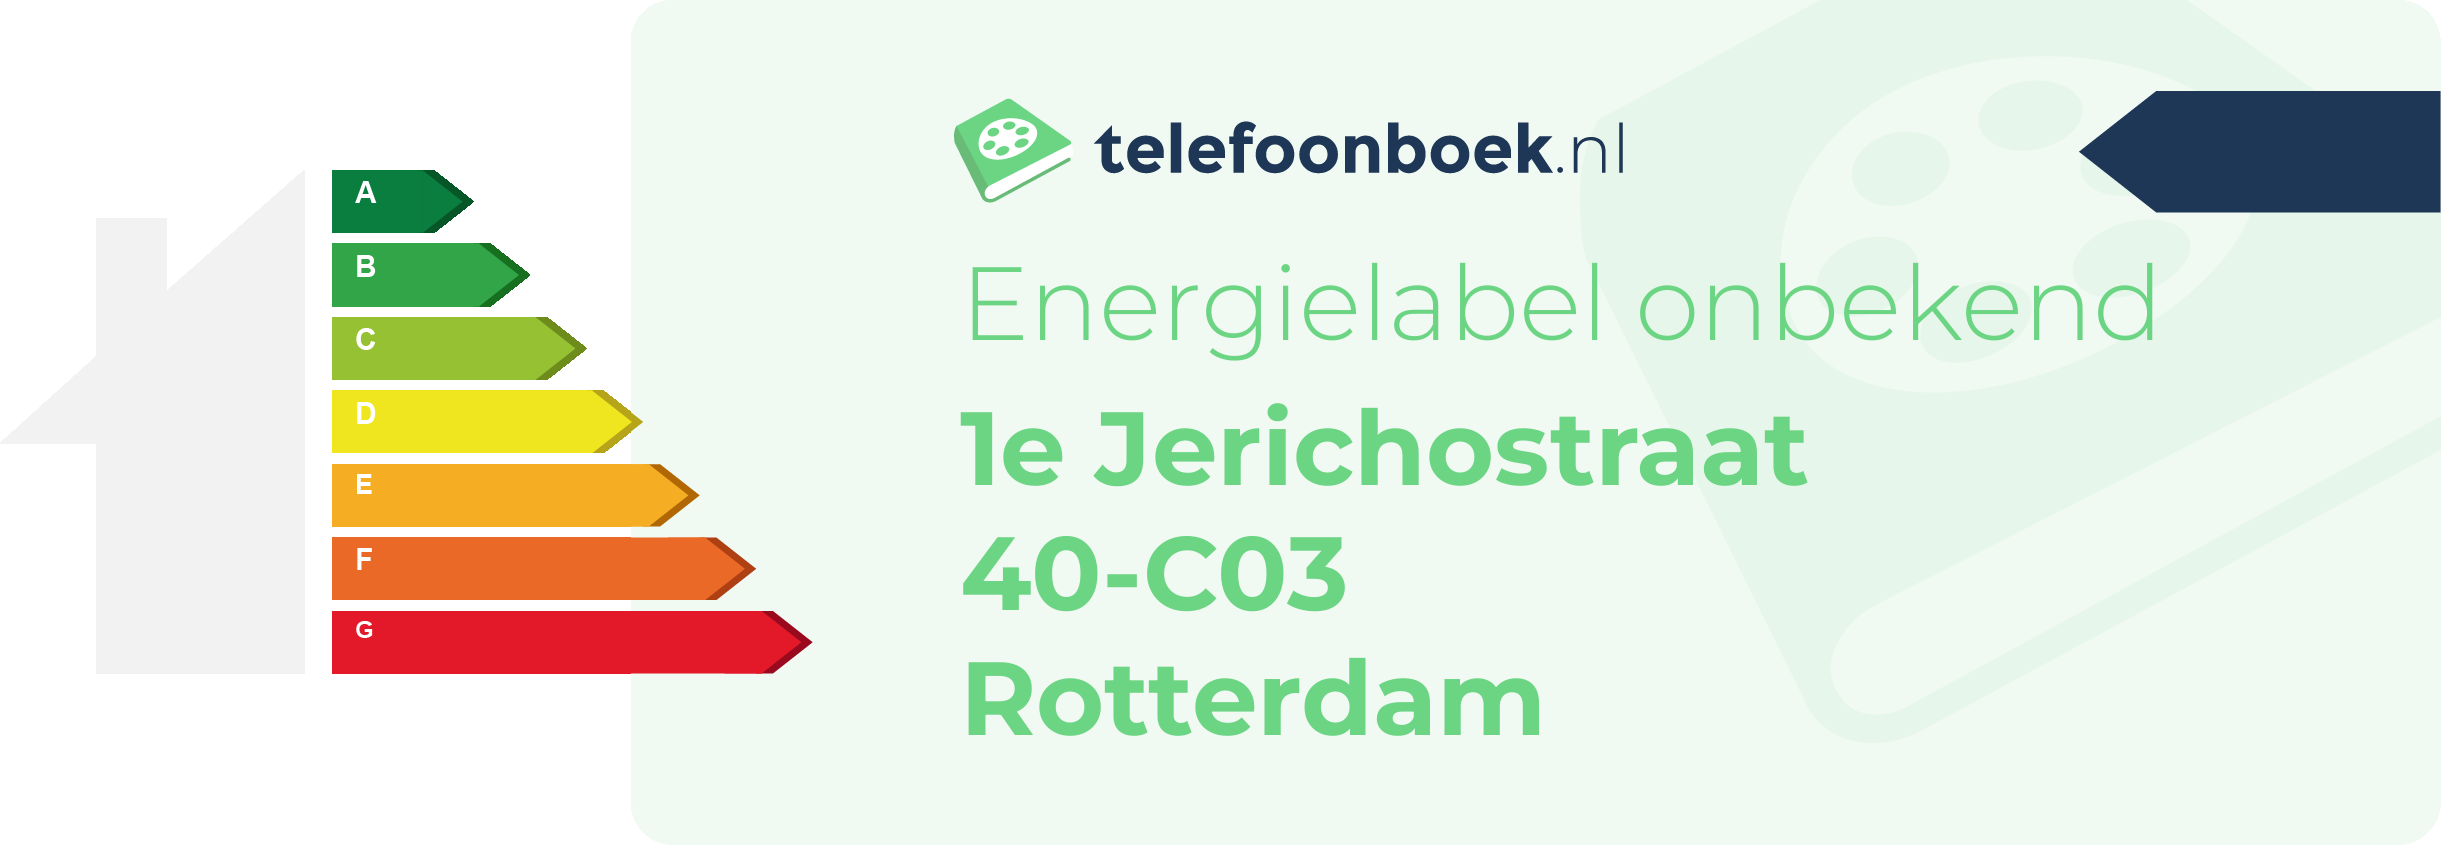 Energielabel 1e Jerichostraat 40-C03 Rotterdam